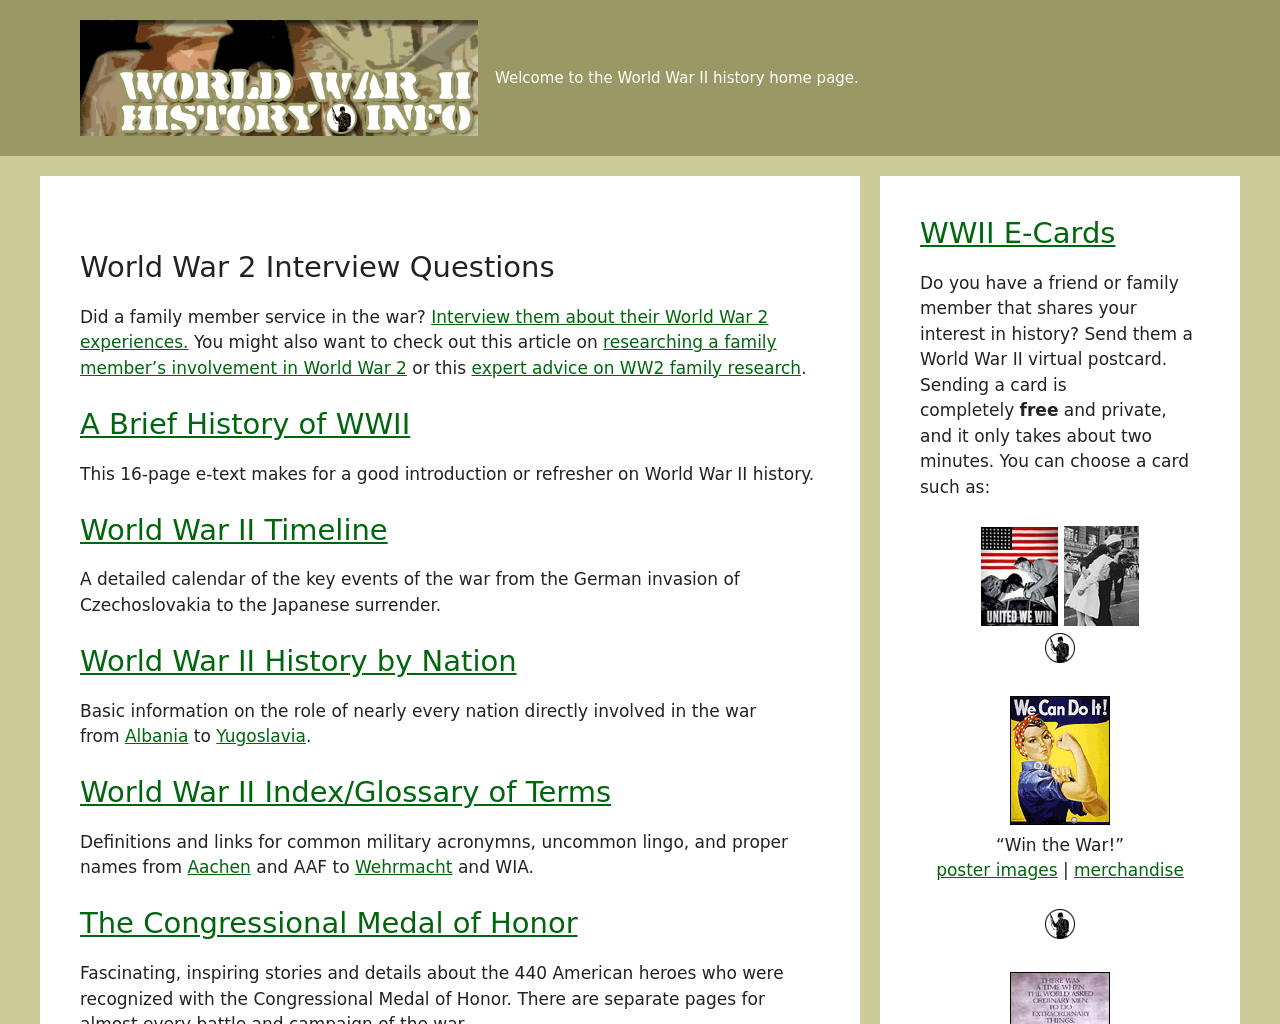 worldwar2history.info